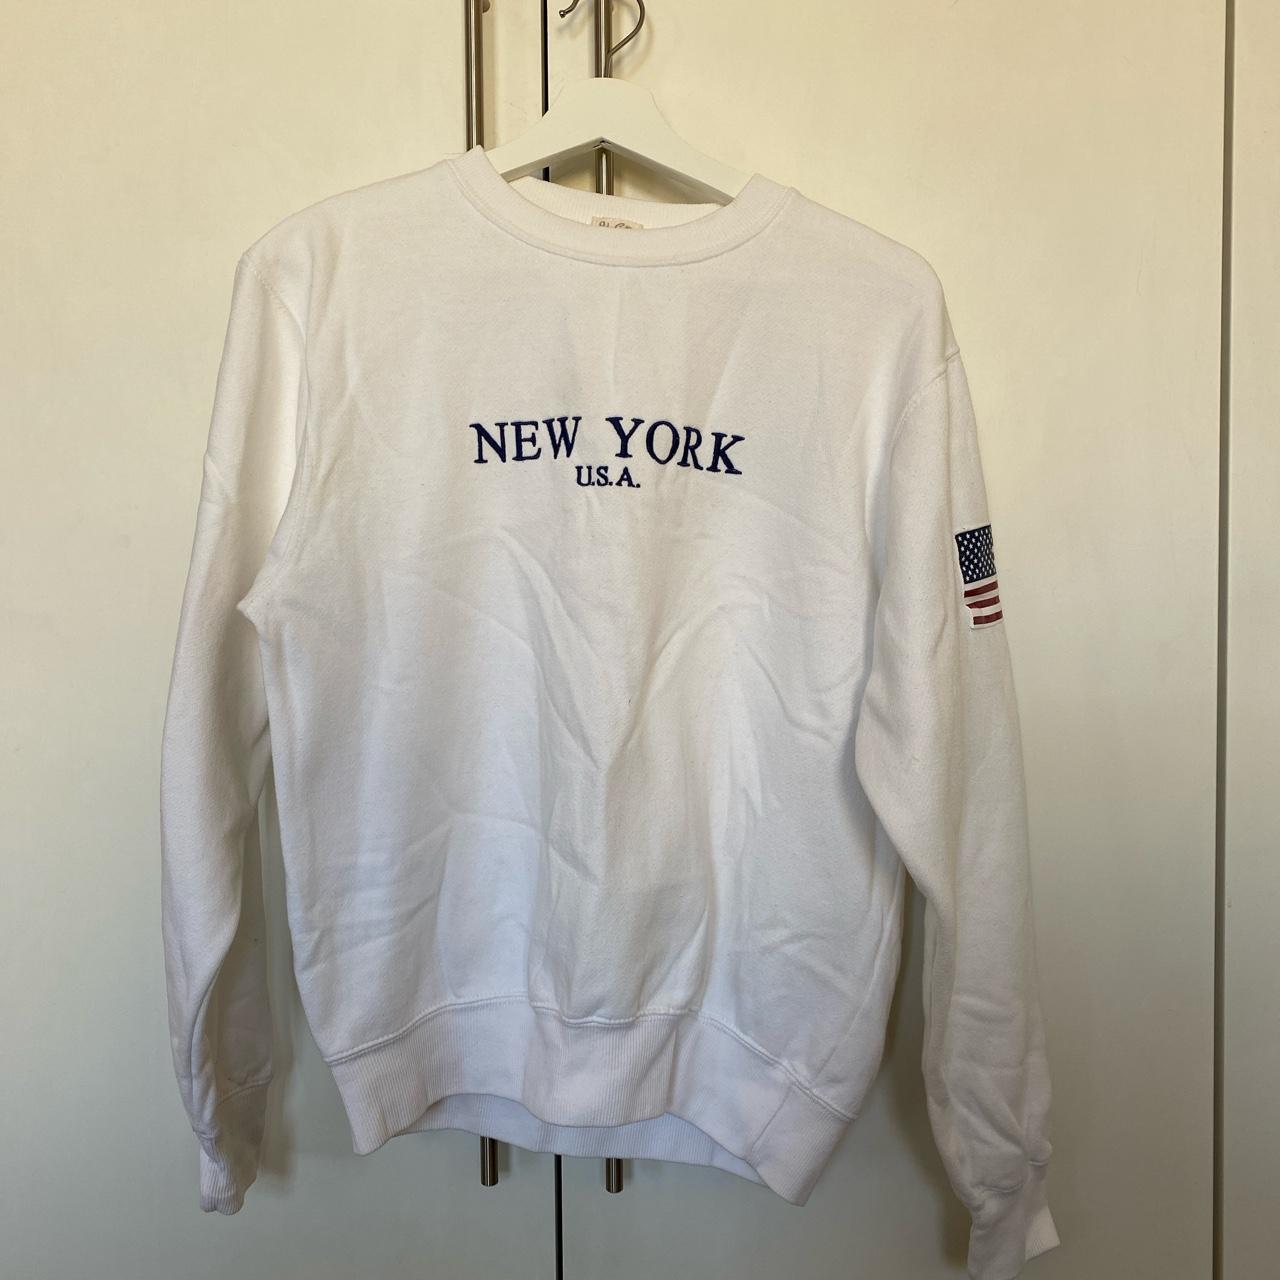 Brandy Melville USA New York white sweatshirt - one... - Depop